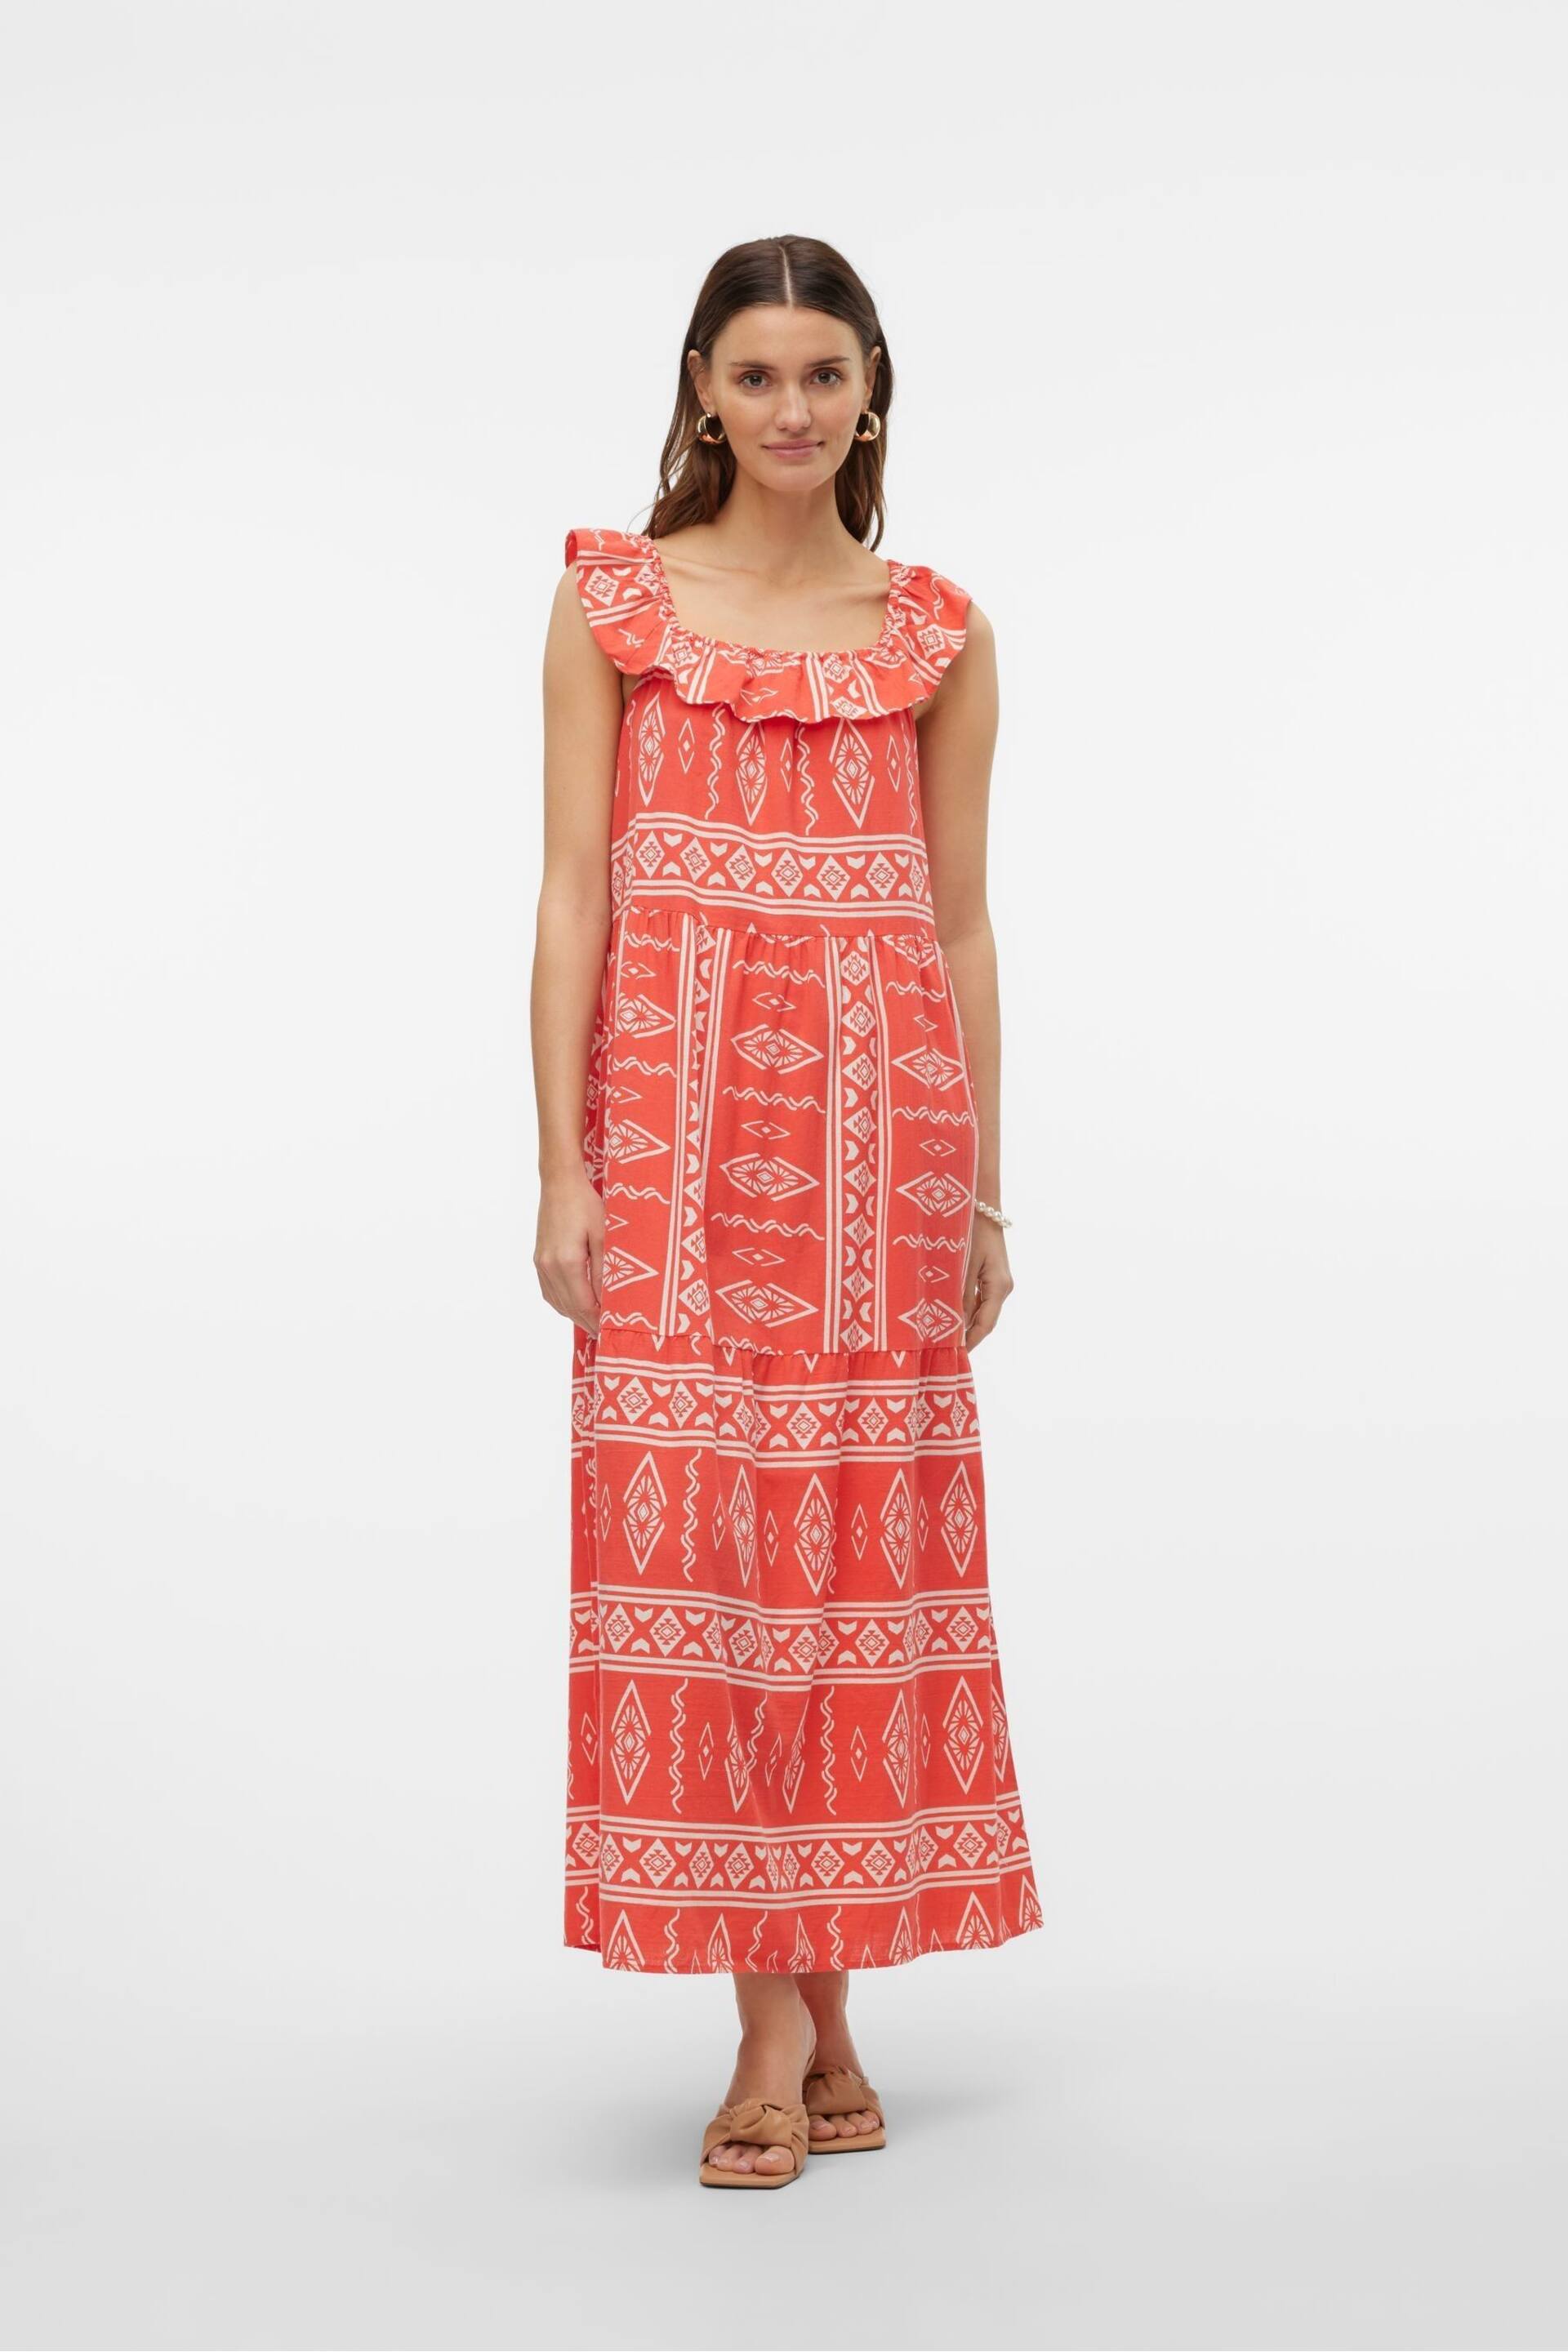 VERO MODA Pink Aztec Print Ruffle Summer Maxi Dress - Image 2 of 7